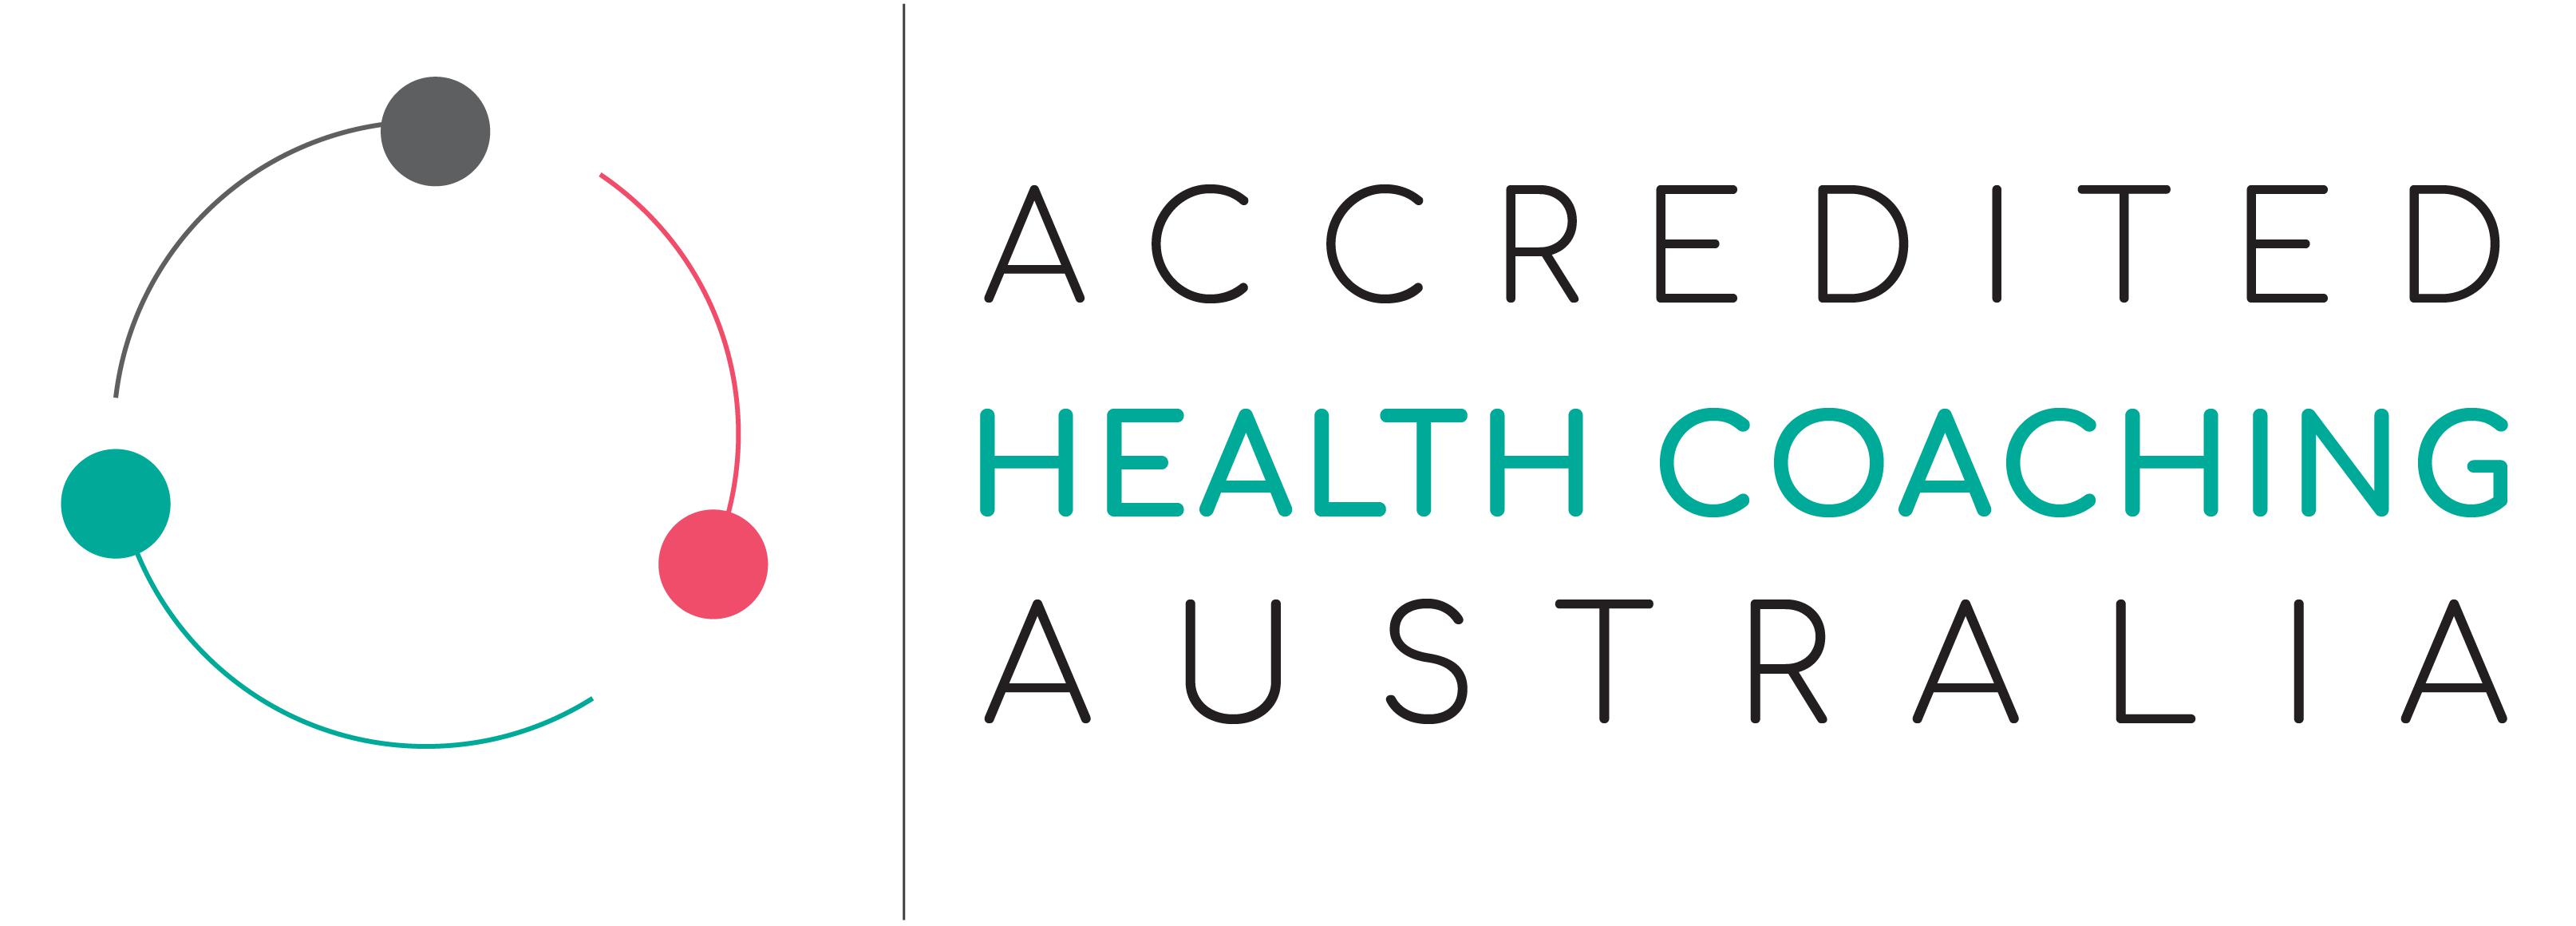 Accredited Health Coaching Australia Logo